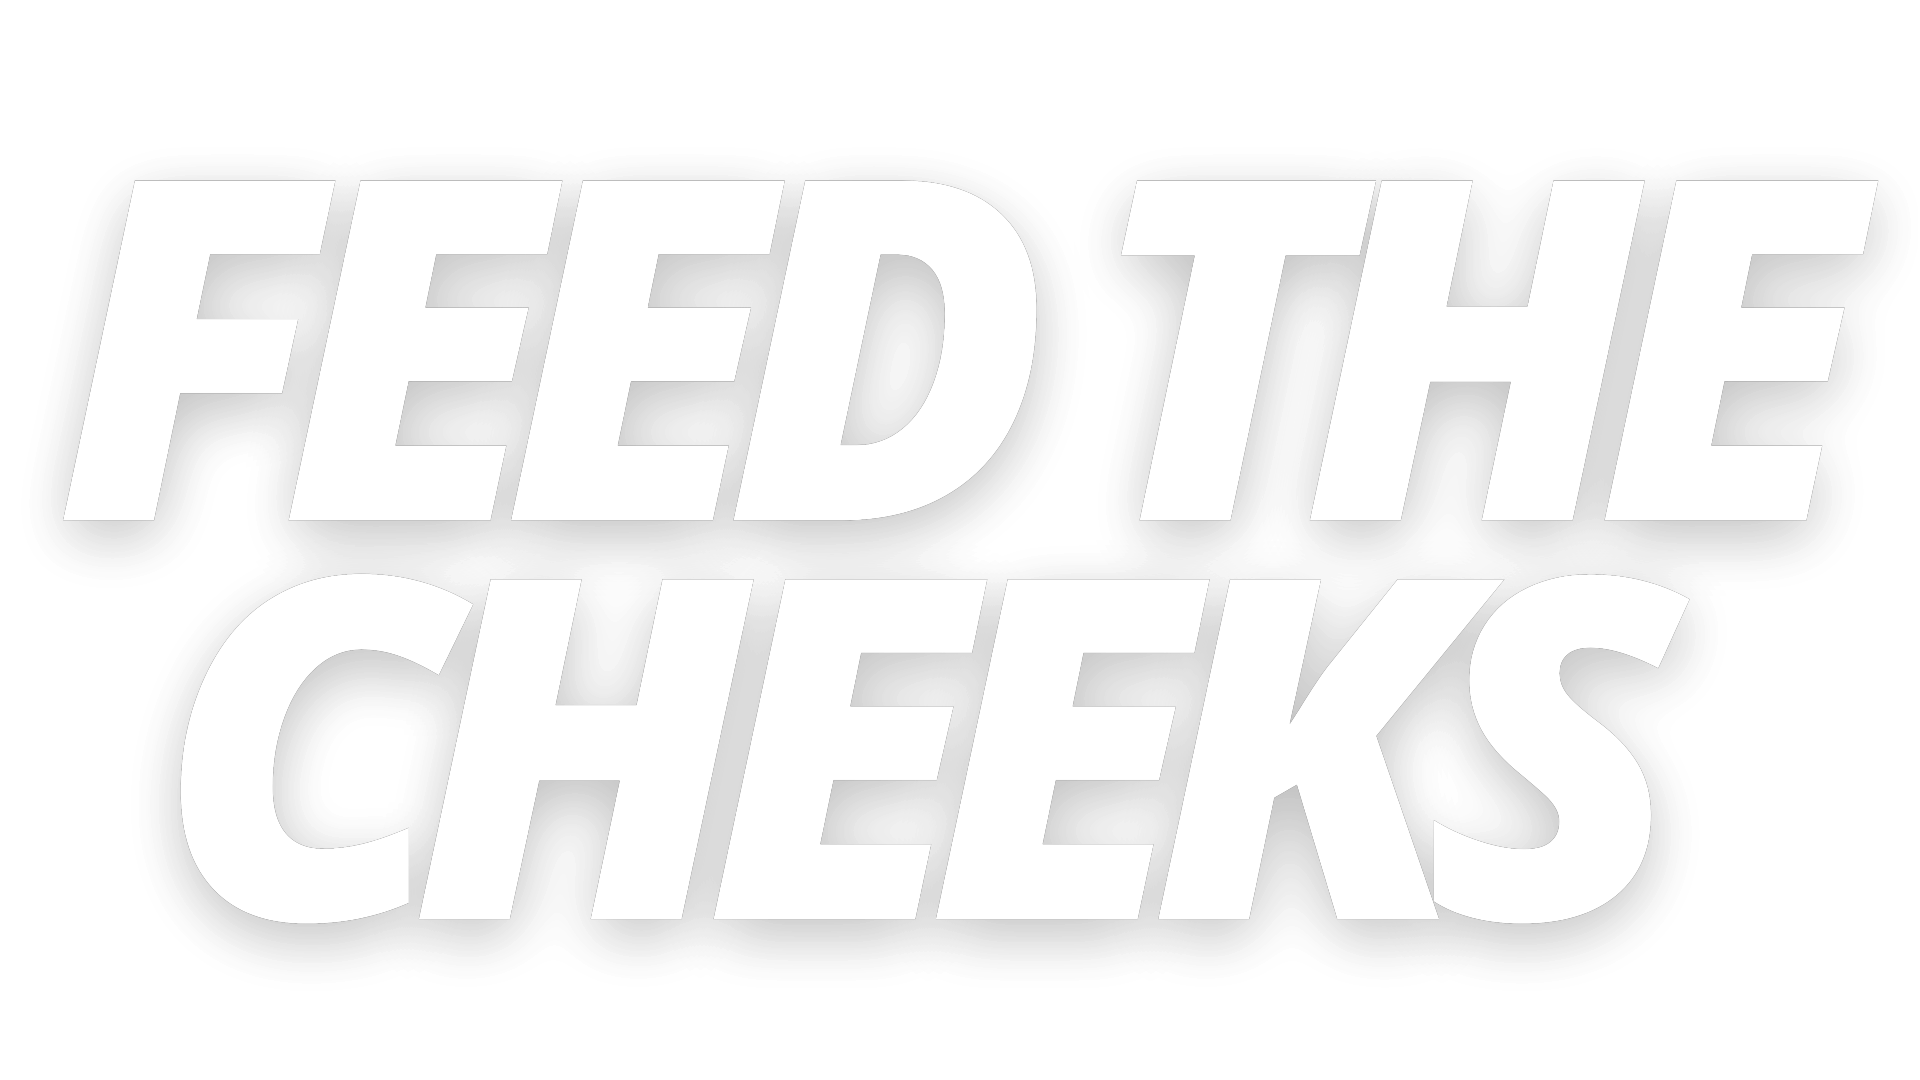 Feed the Cheeks Inc. Home